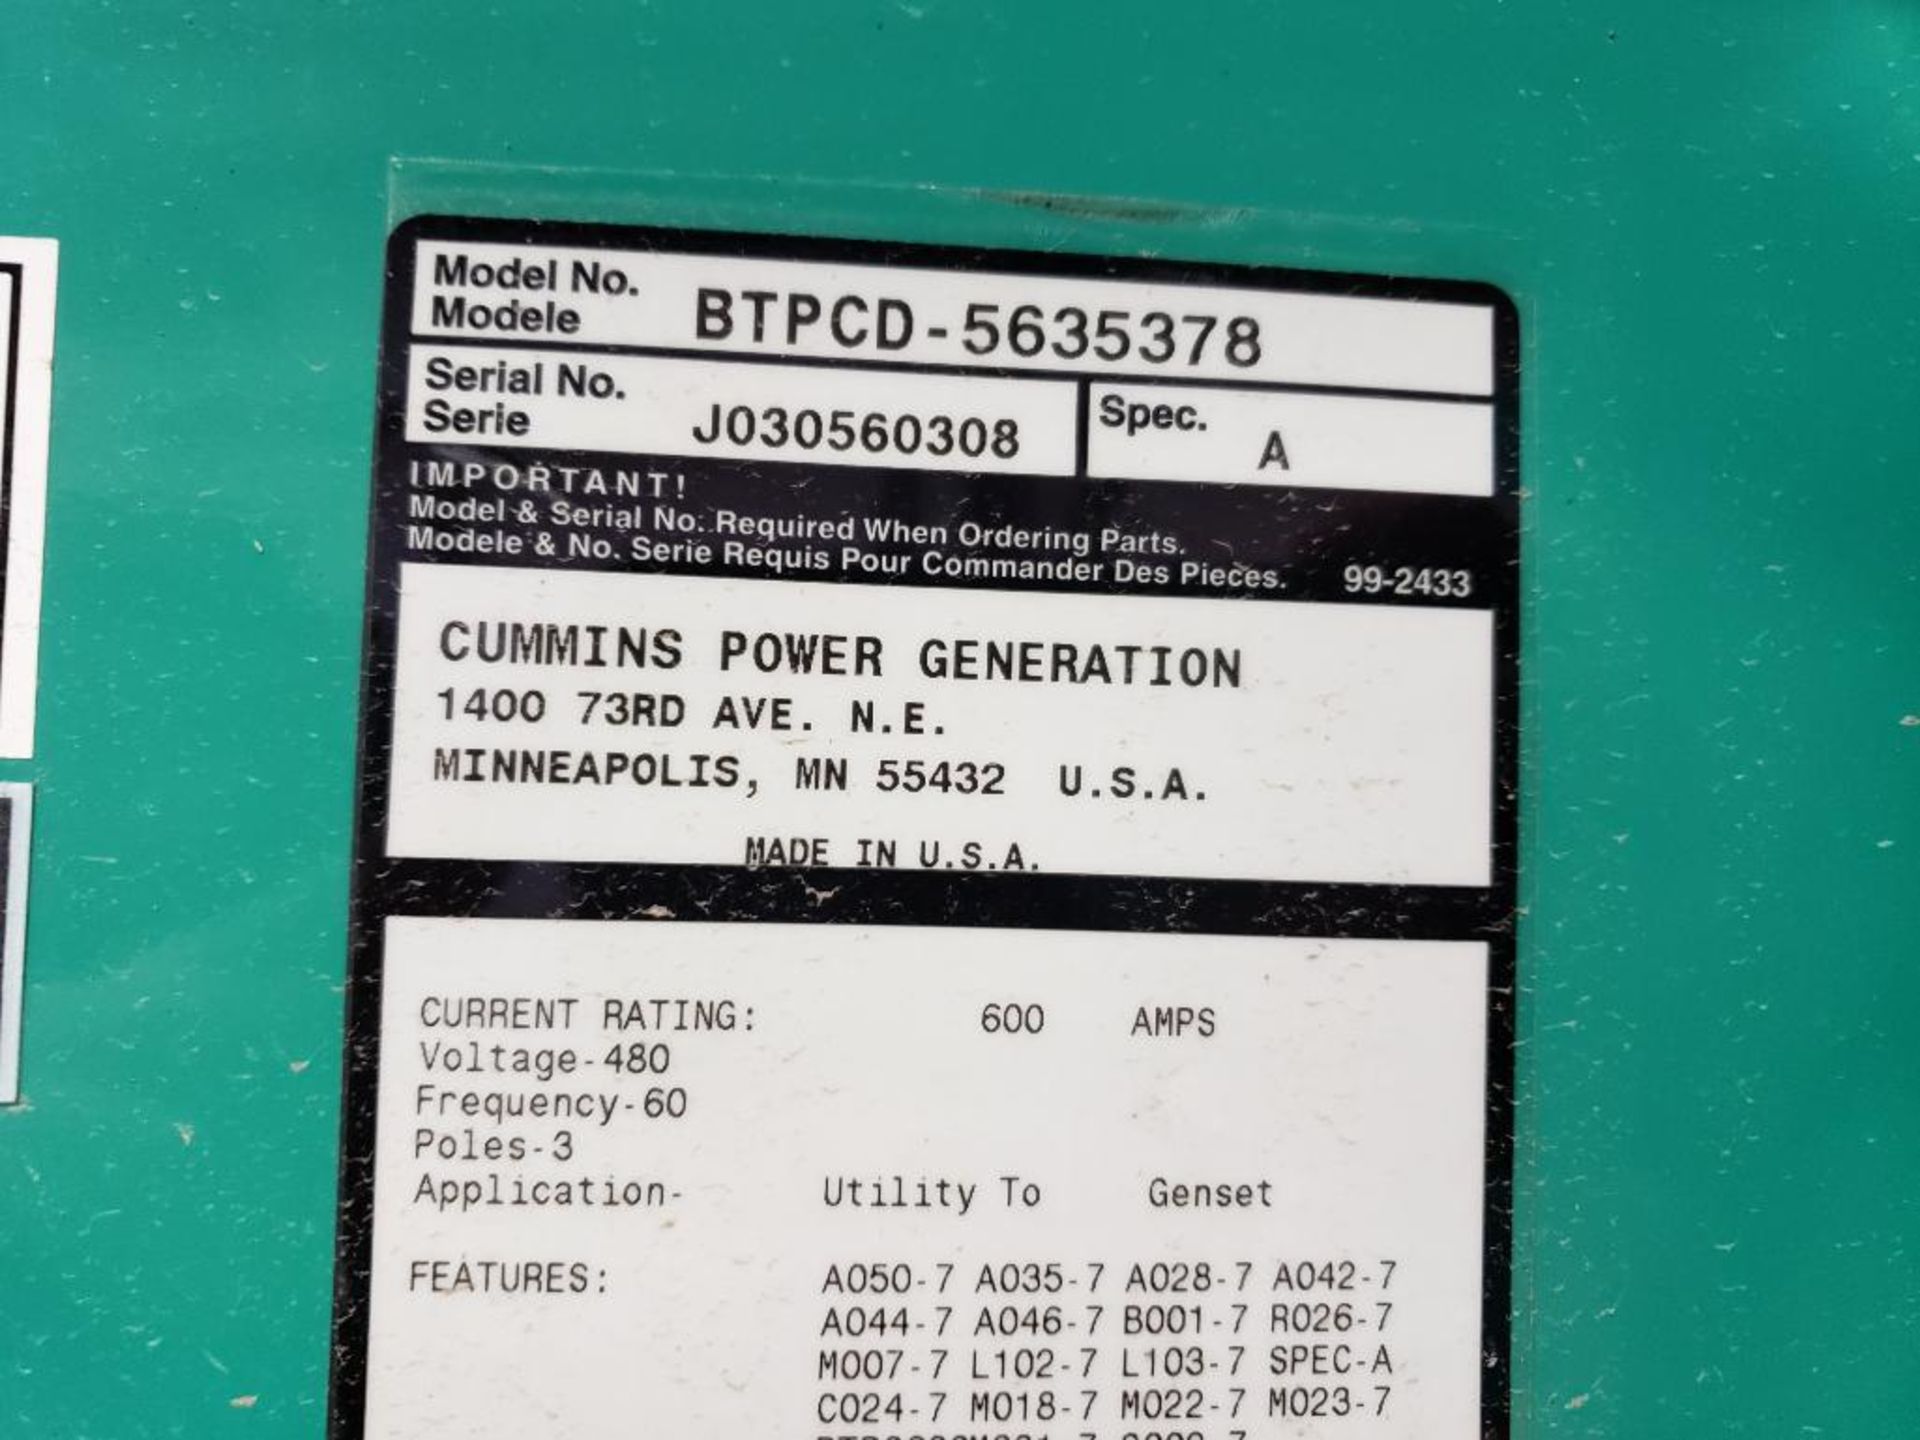 Power Generation PowerCommand Transfer Switch. BTPCD-5635378, 600 AMPS. - Image 10 of 10